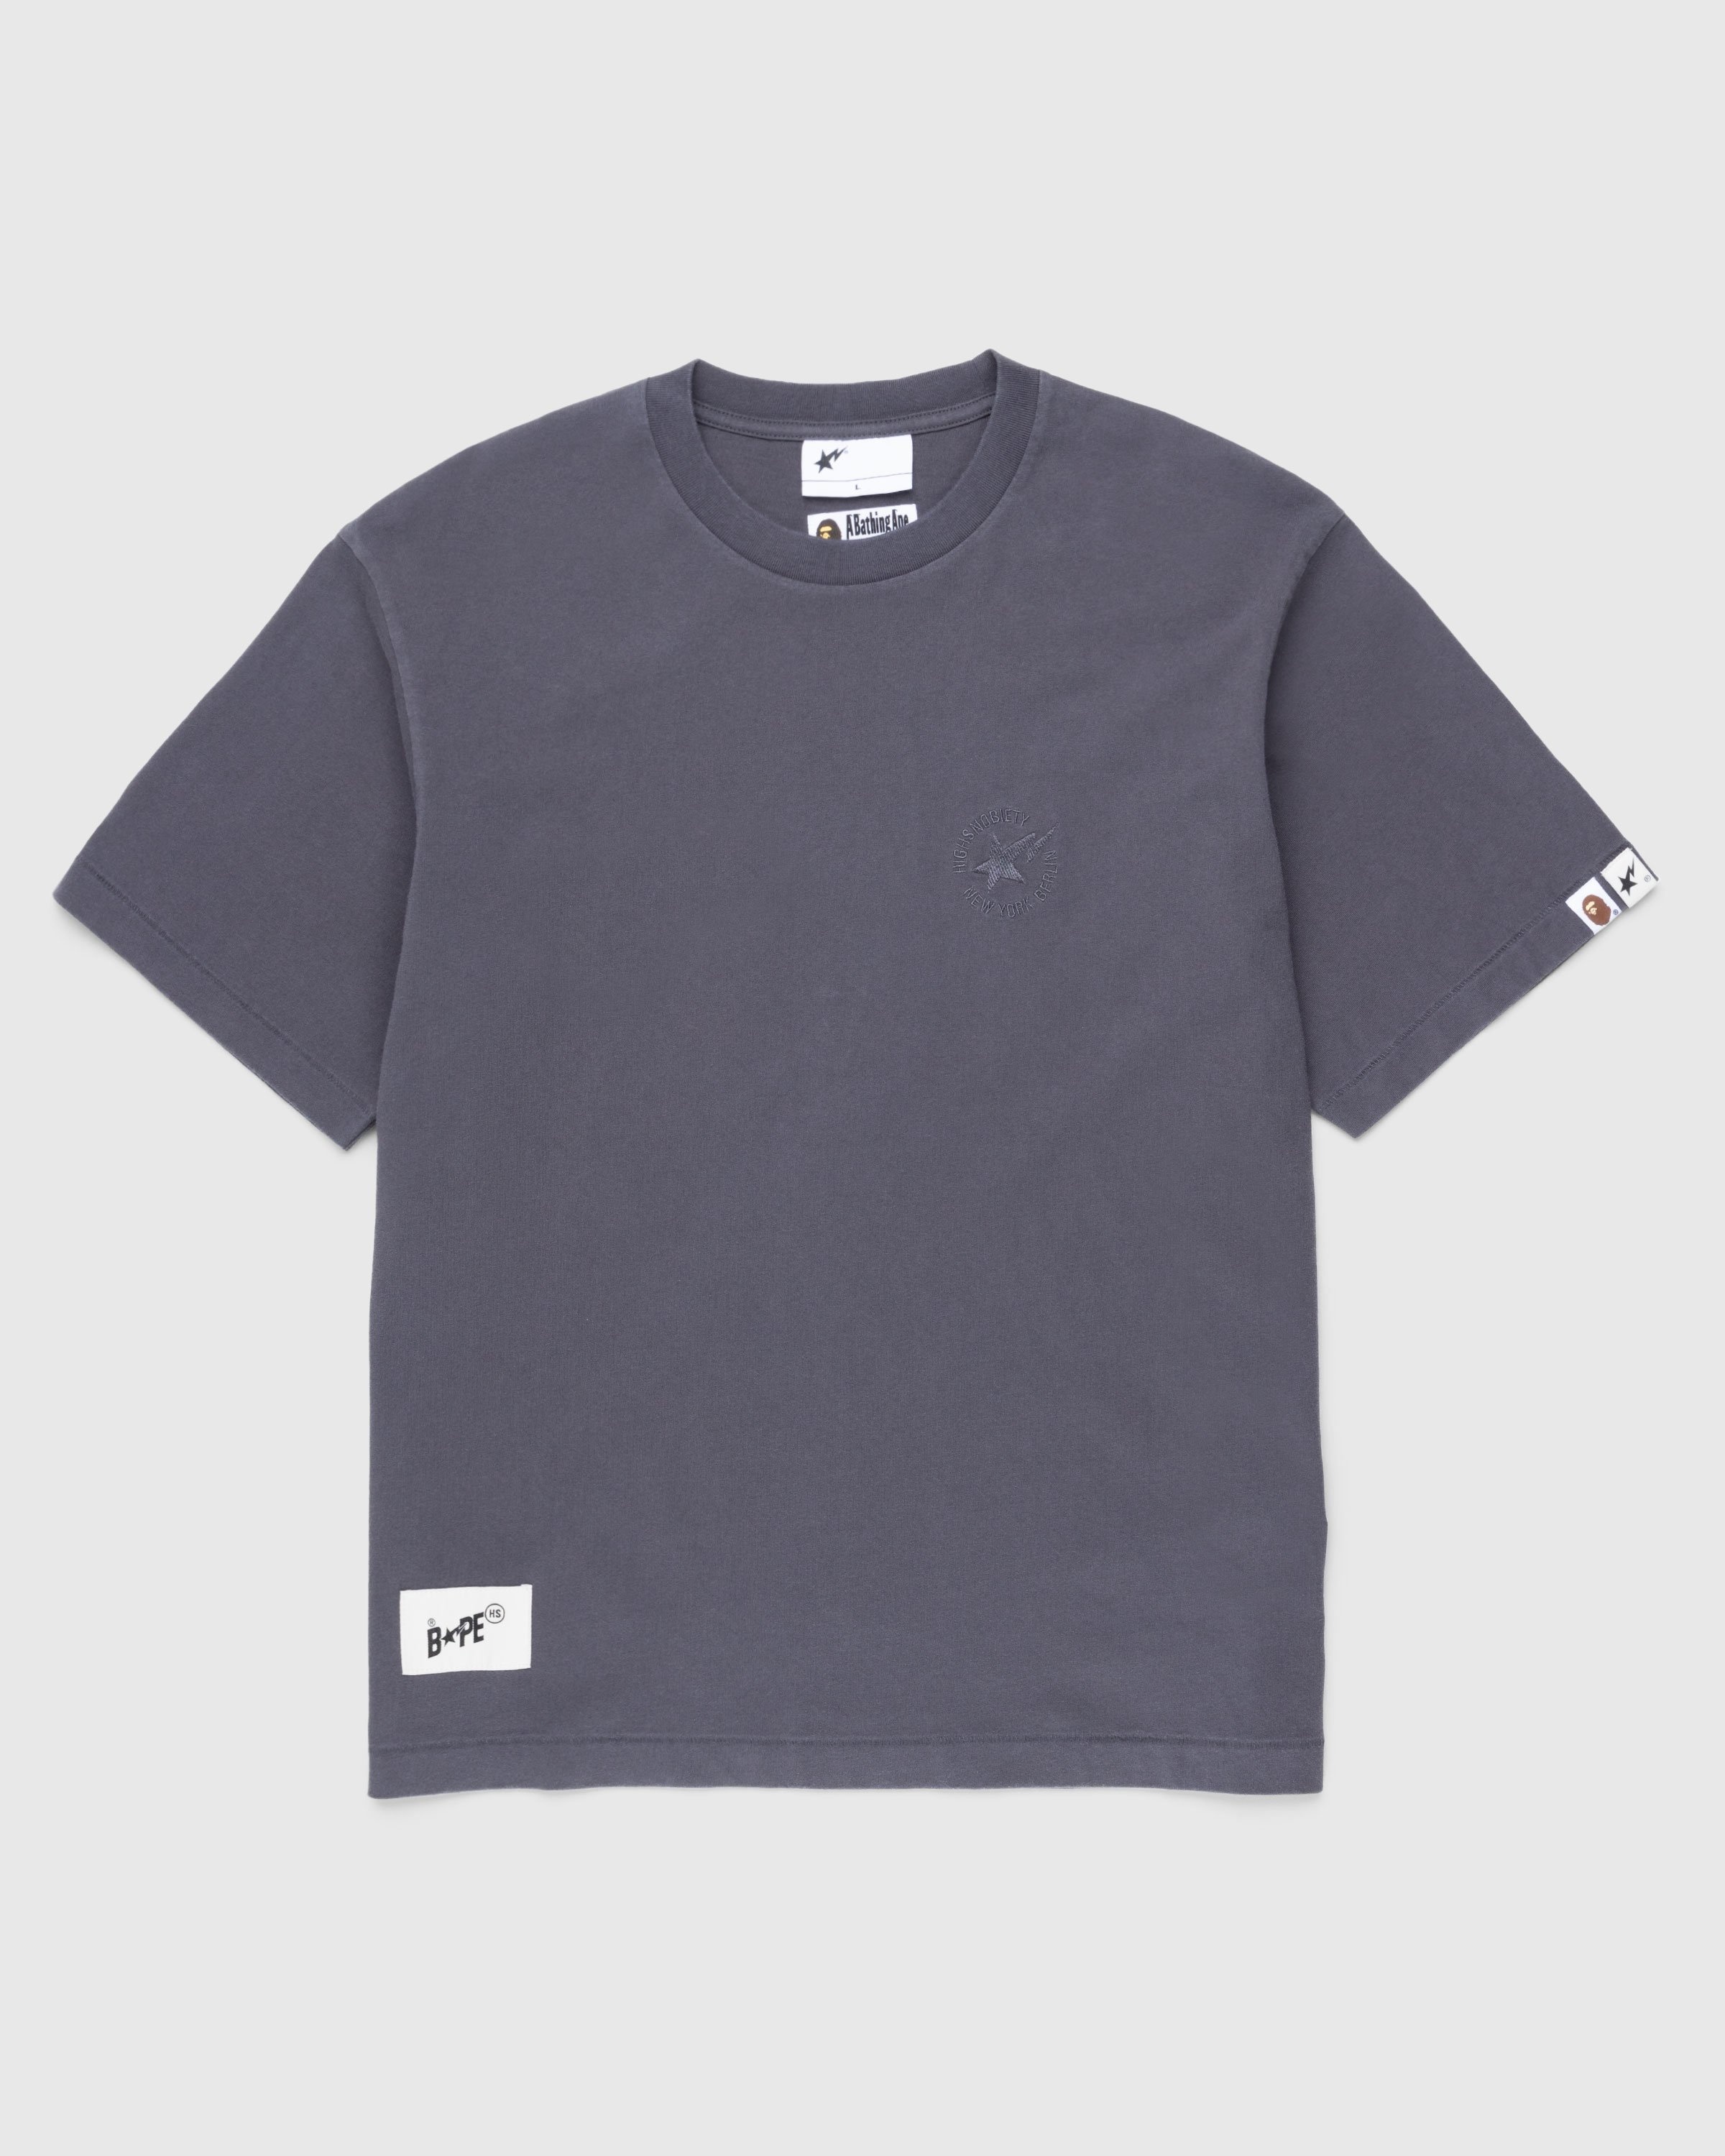 BAPE x Highsnobiety – Heavy Washed T-Shirt Charcoal | Highsnobiety Shop